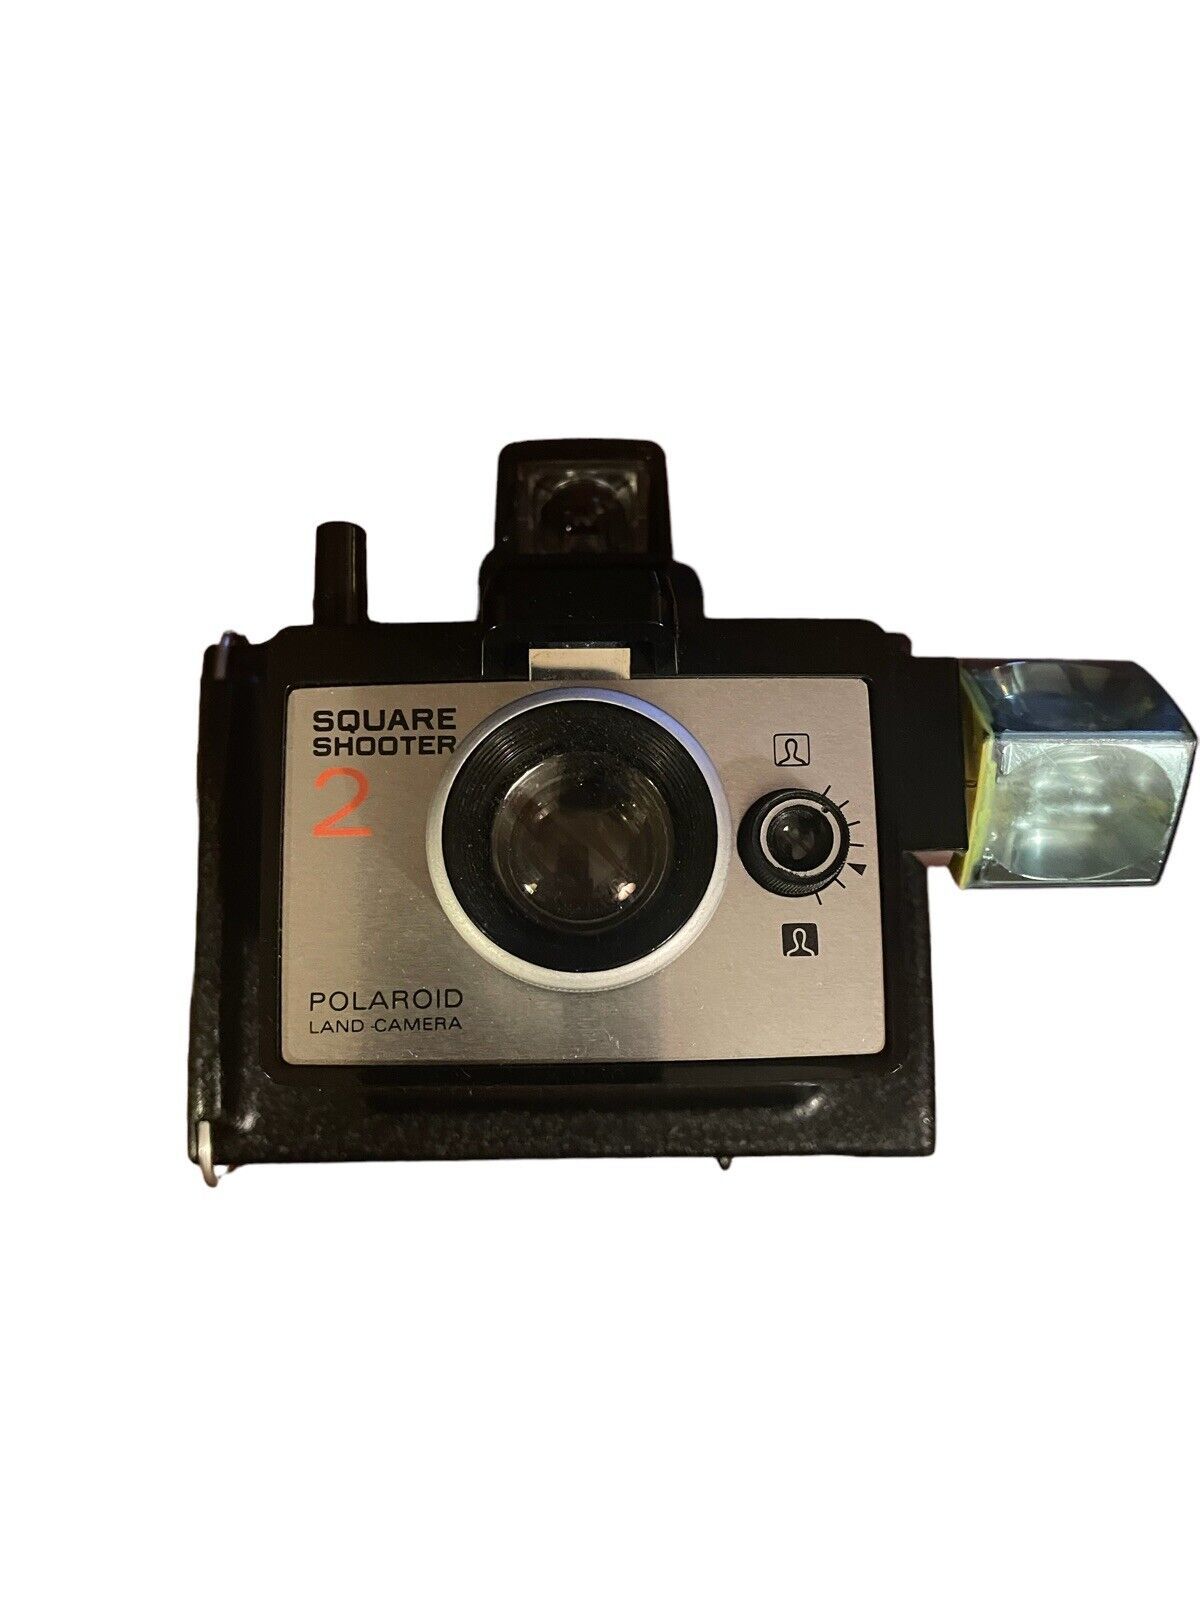 Polaroid, Land Camera, Square Shooter 2 Type 88 film, Vintage 1970s Untested - $26.76